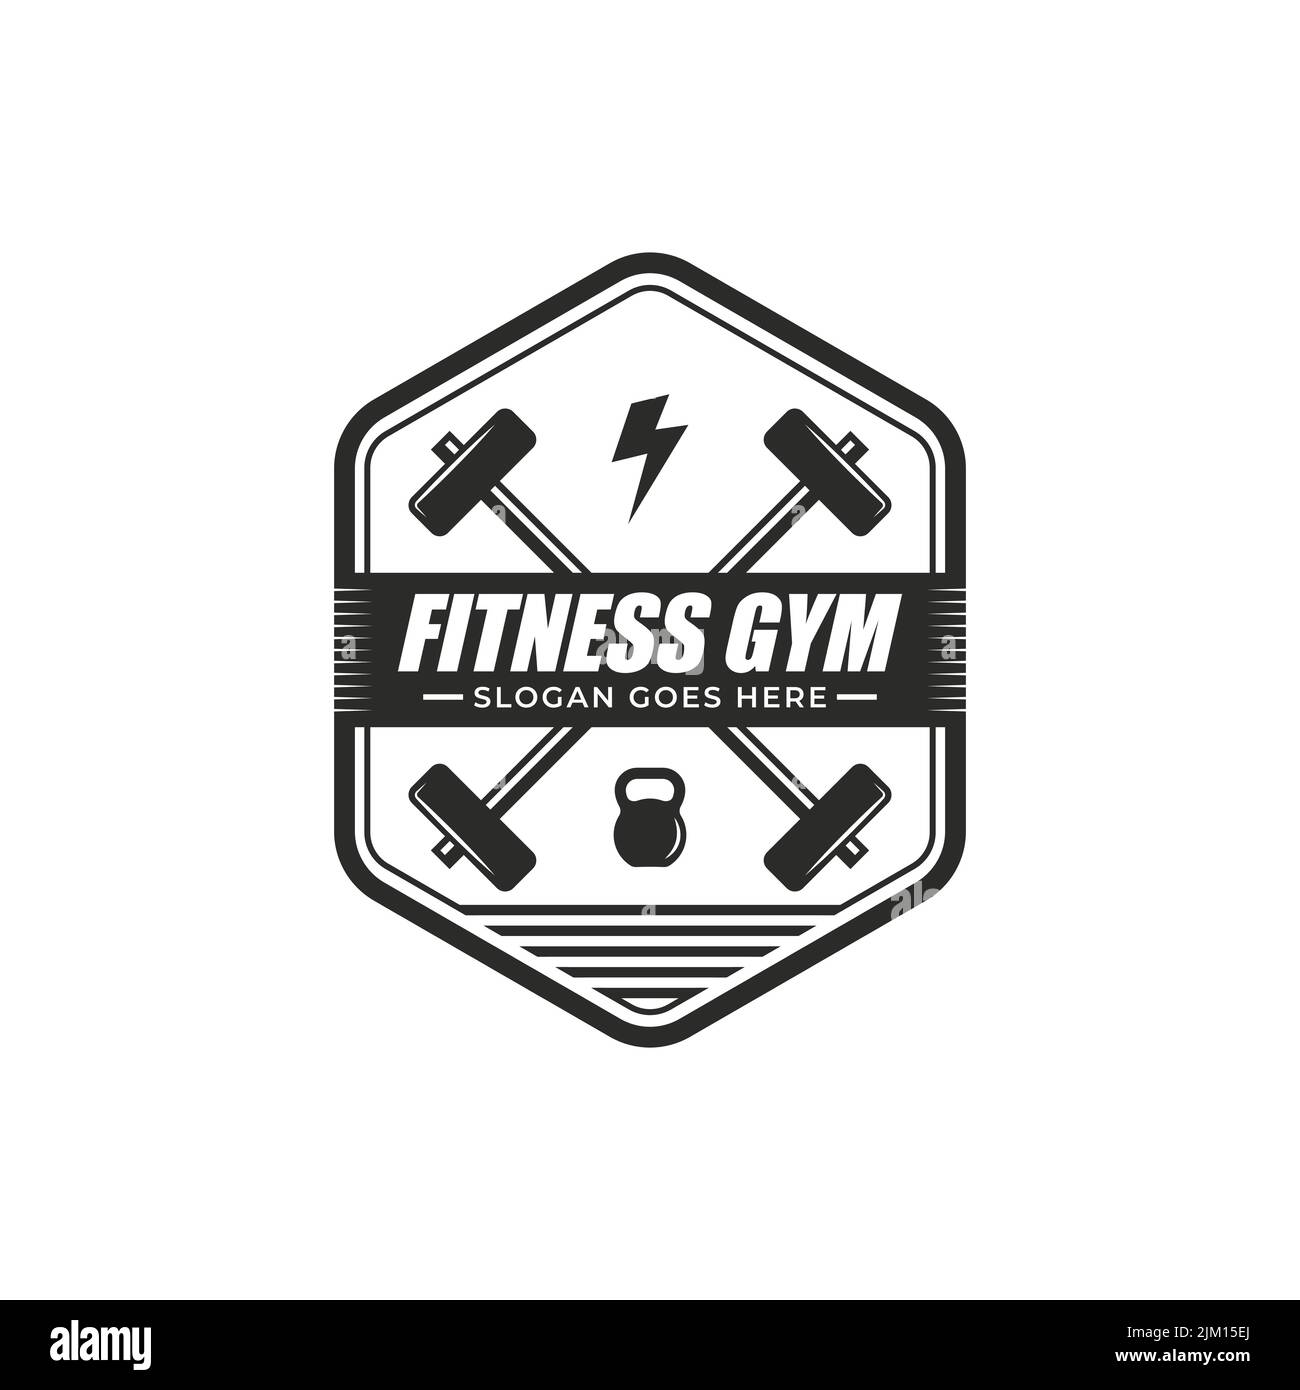 Power Gym Fitness Center Logo Design Abzeichen Vektor mit rustikalen Stil , am besten für Fitness-Studio Training Center Vektor Illustration Stock Vektor